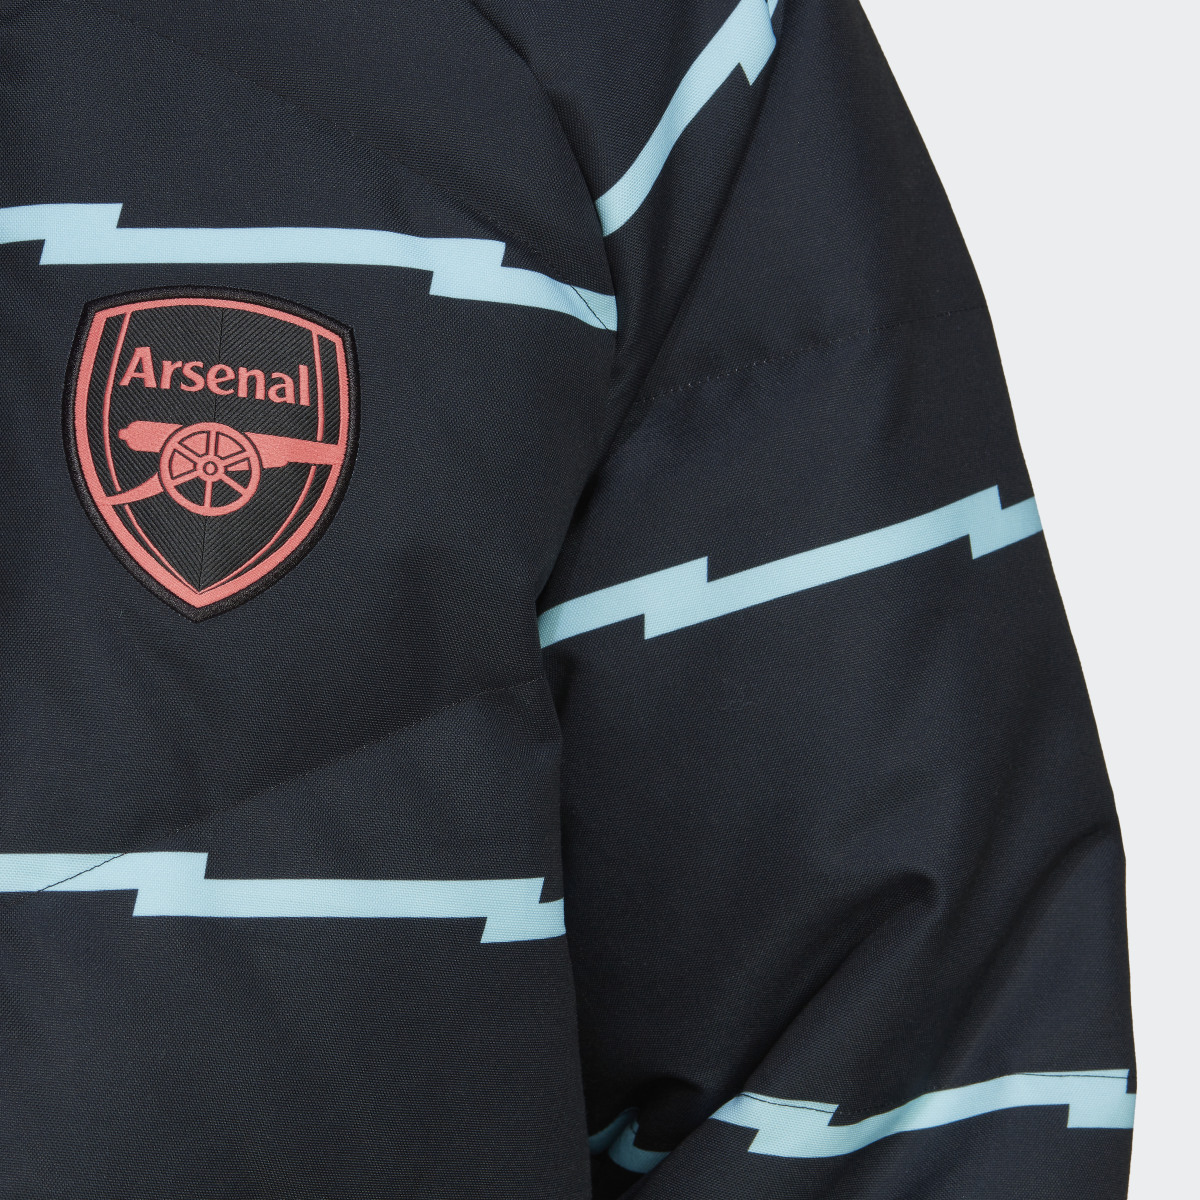 Adidas Arsenal Lifestyler Down Coat. 6